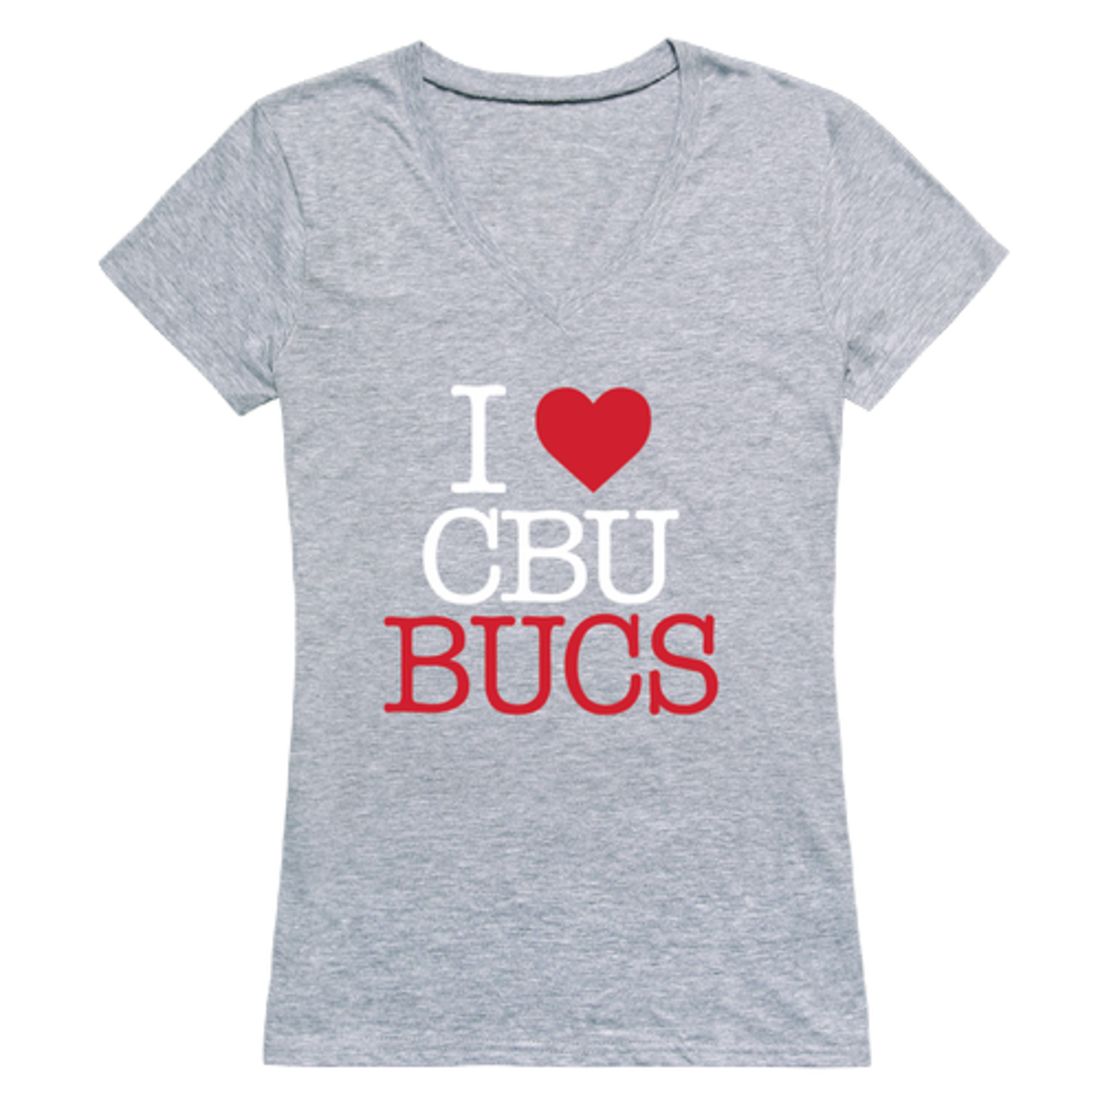 I Love Christian Brothers University Buccaneers Womens T-Shirt Tee